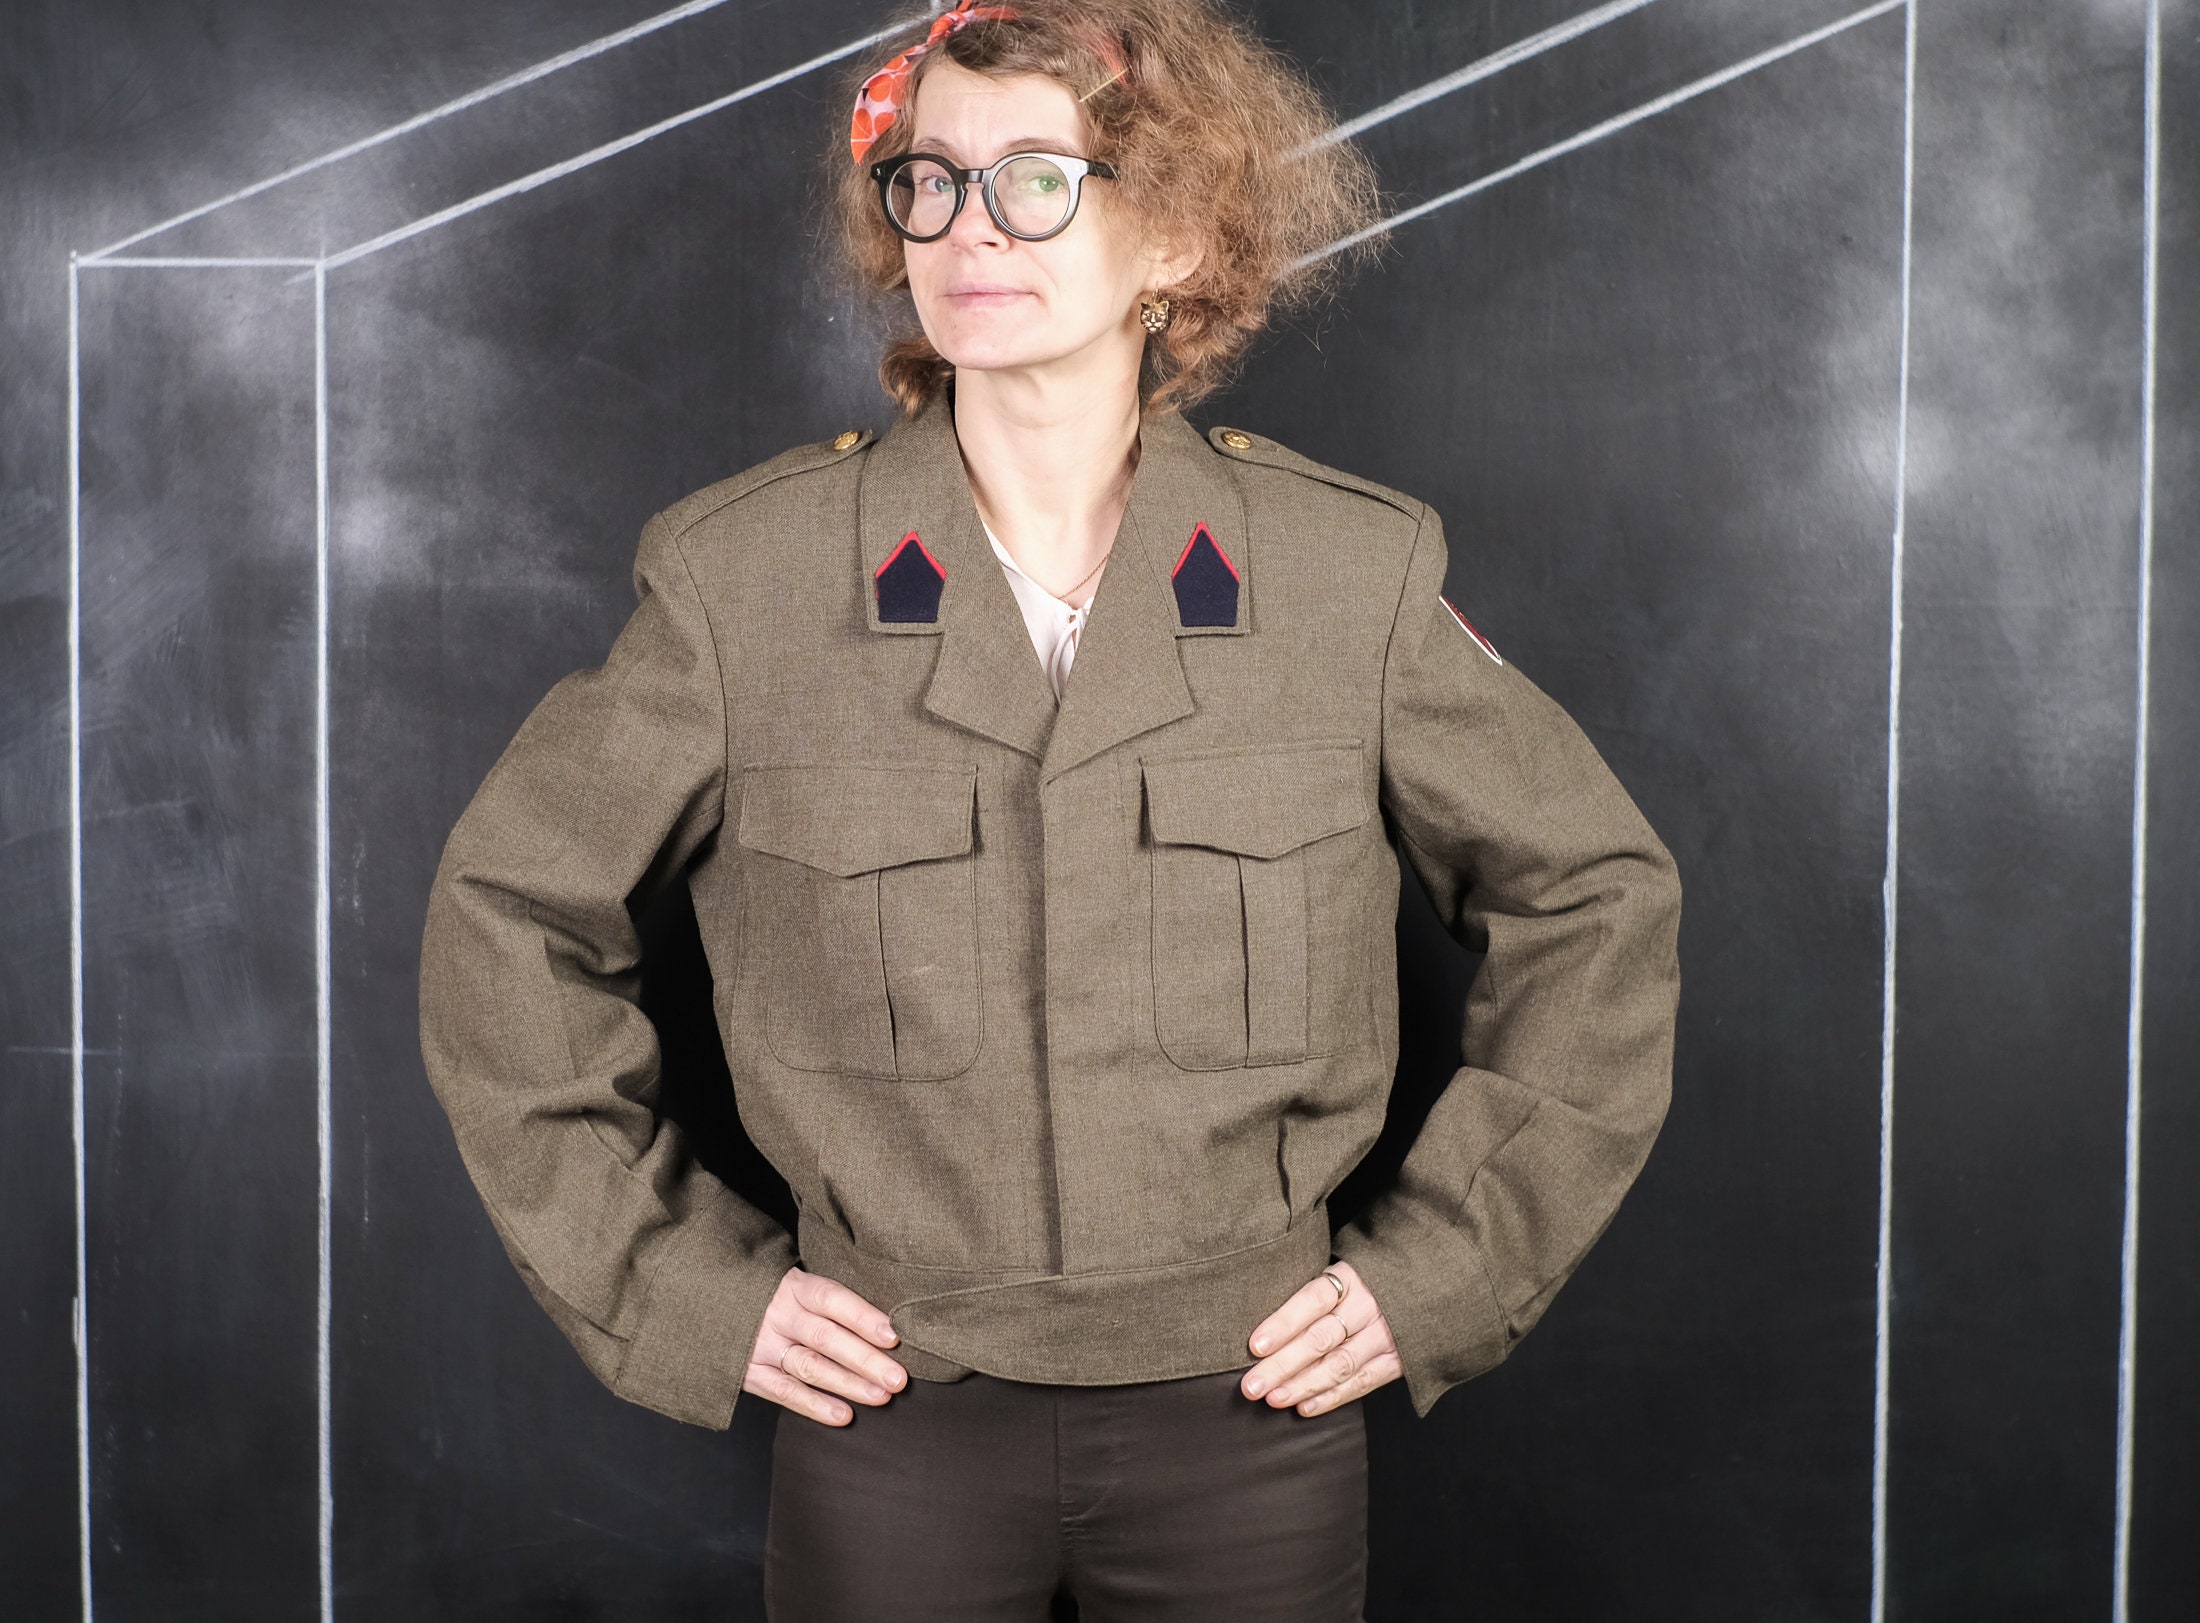 80s Belgian military twill jacket